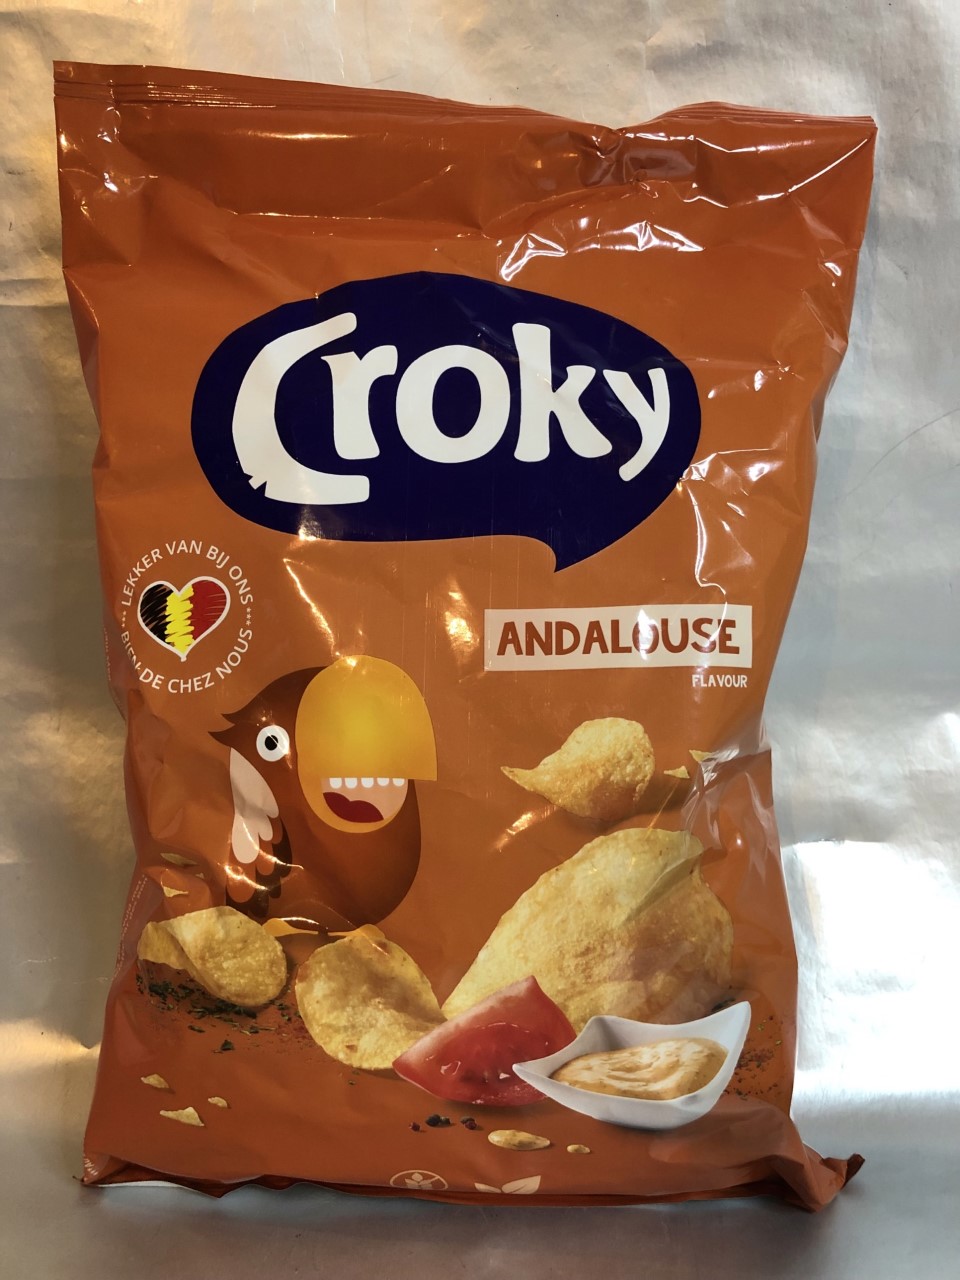 Crocky 'Andalouse' crisps